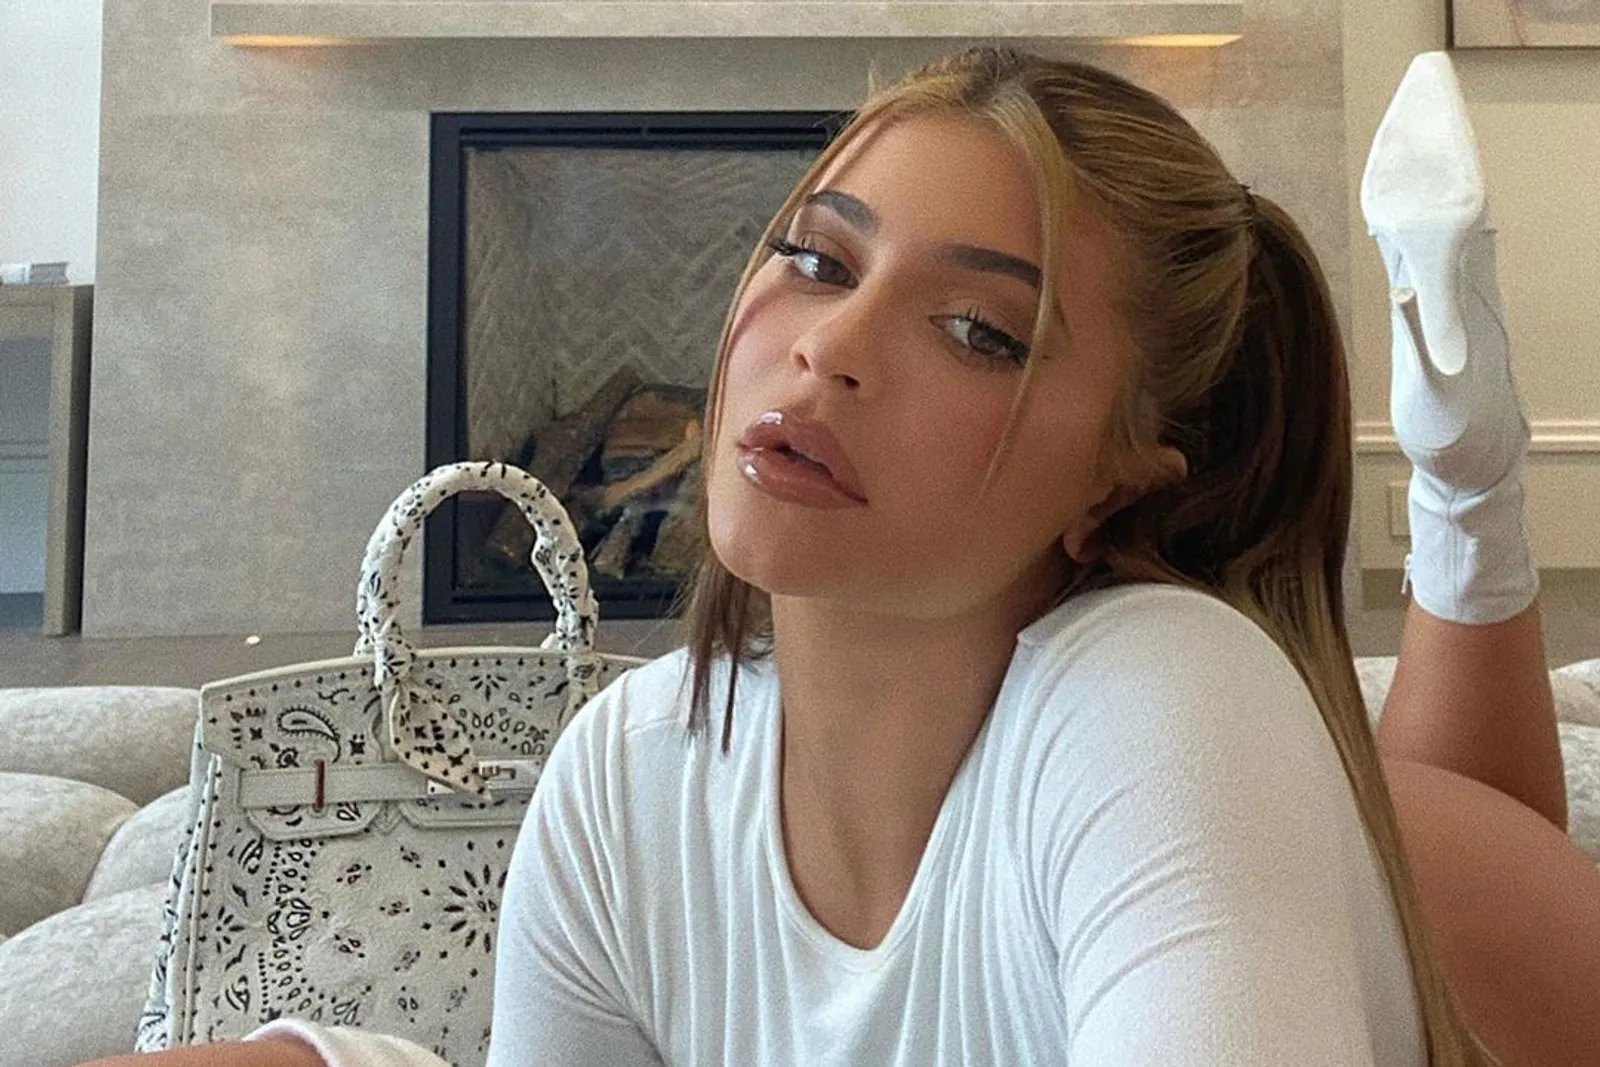 Cuma Zoom Meeting, Kylie Jenner Pakai Baju Seksi, dan Pamer 'Itunya'